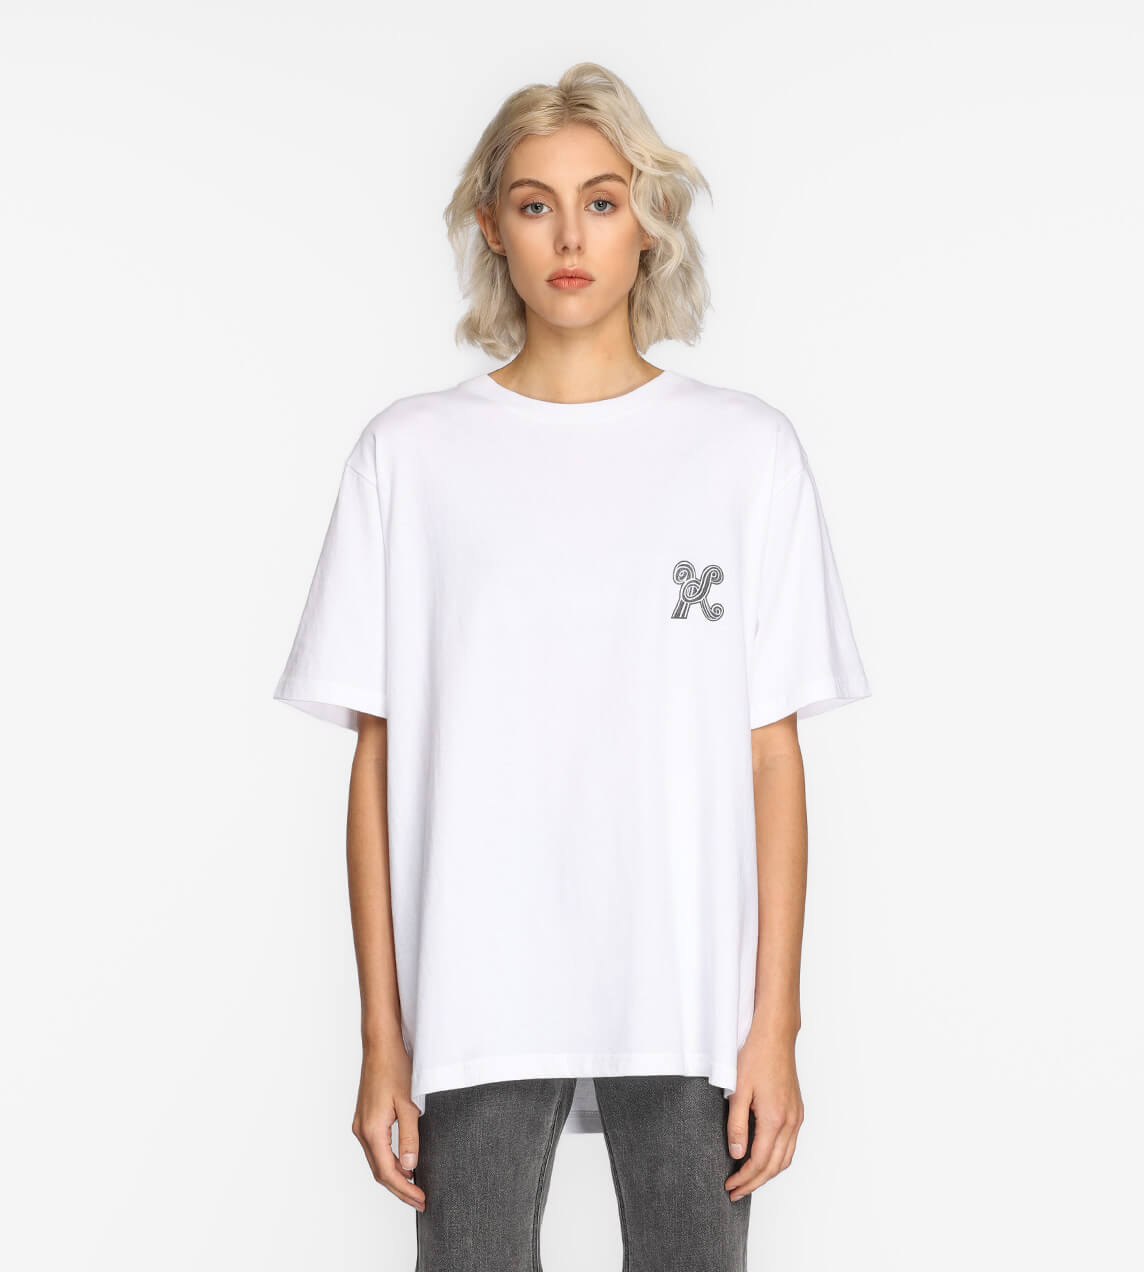 KIMHEKIM - 'Hair' Stamped Loose Fit T-shirt White